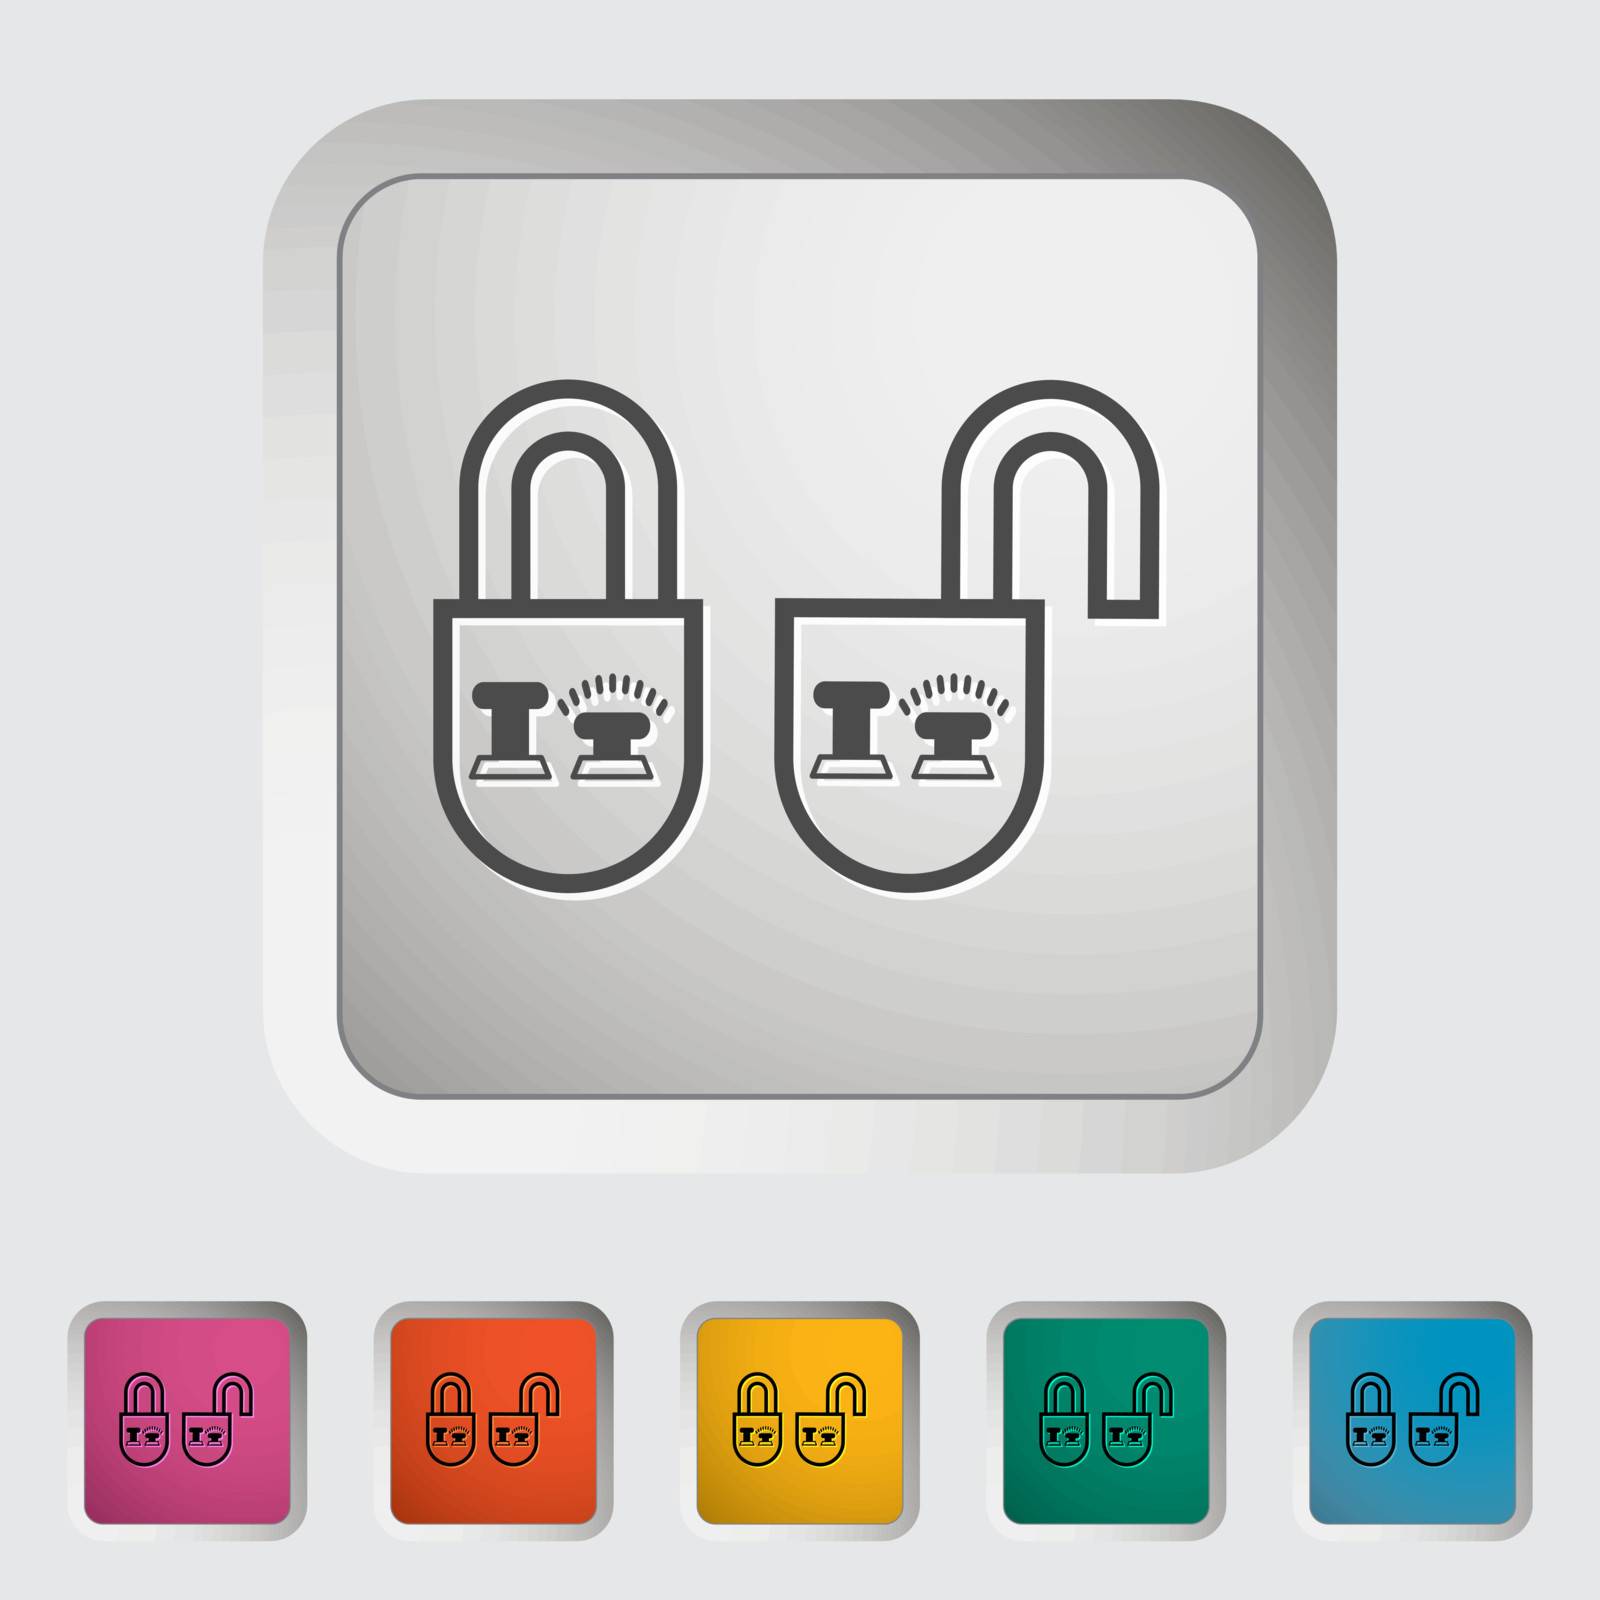 Locking doors. Single icon. Vector illustration.